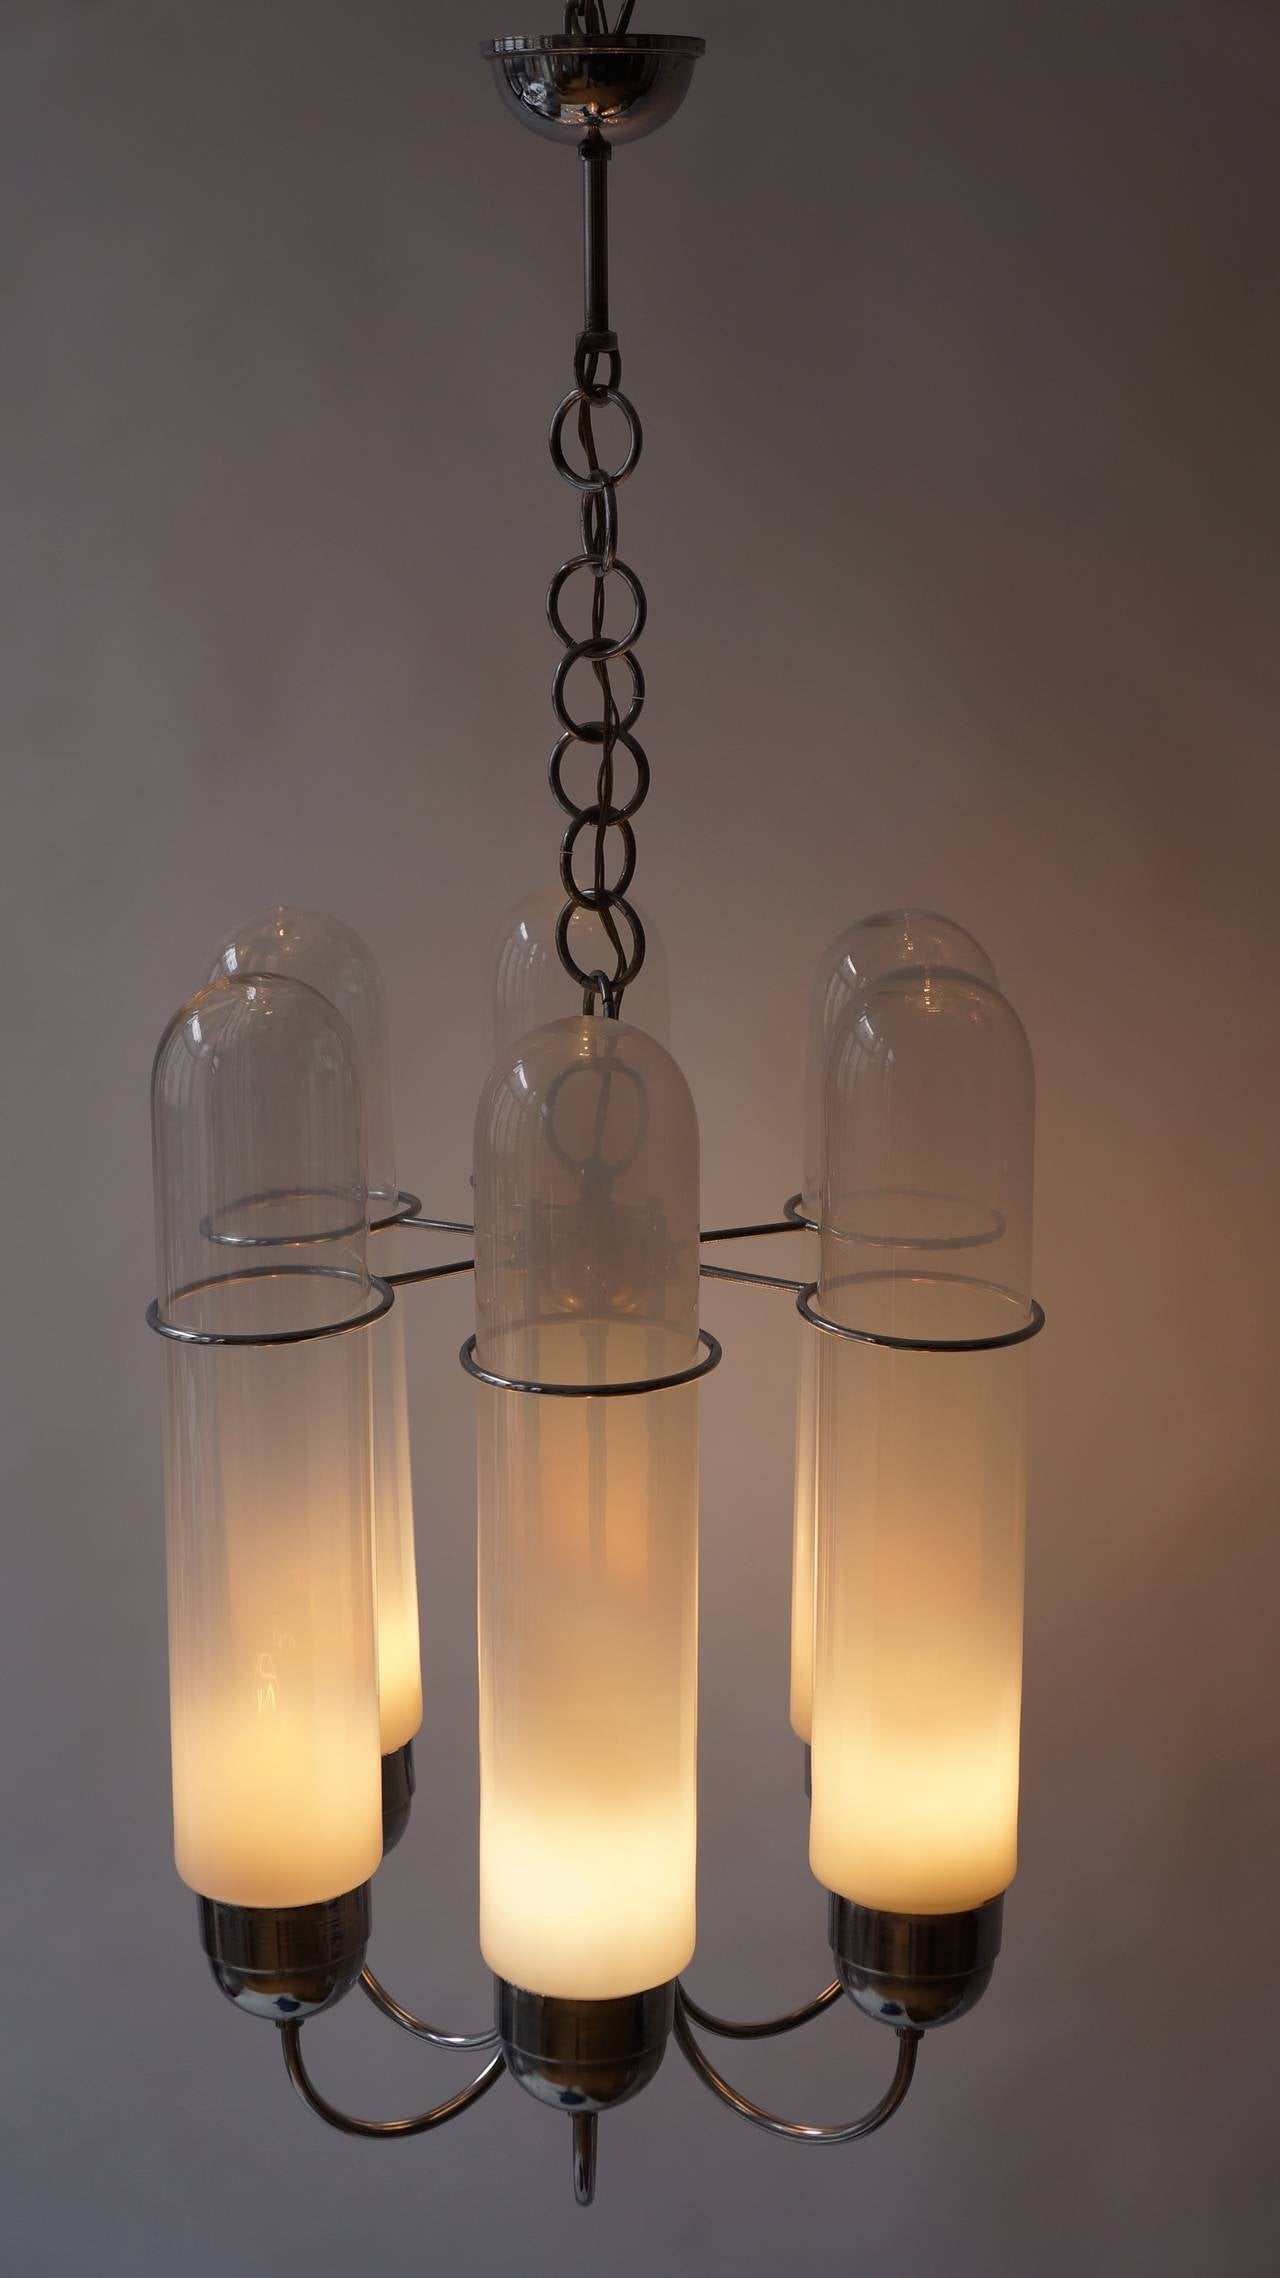 Italian chrome and Murano glass chandelier.
Measure: Diameter 44 cm.
Height fixture 52 cm.